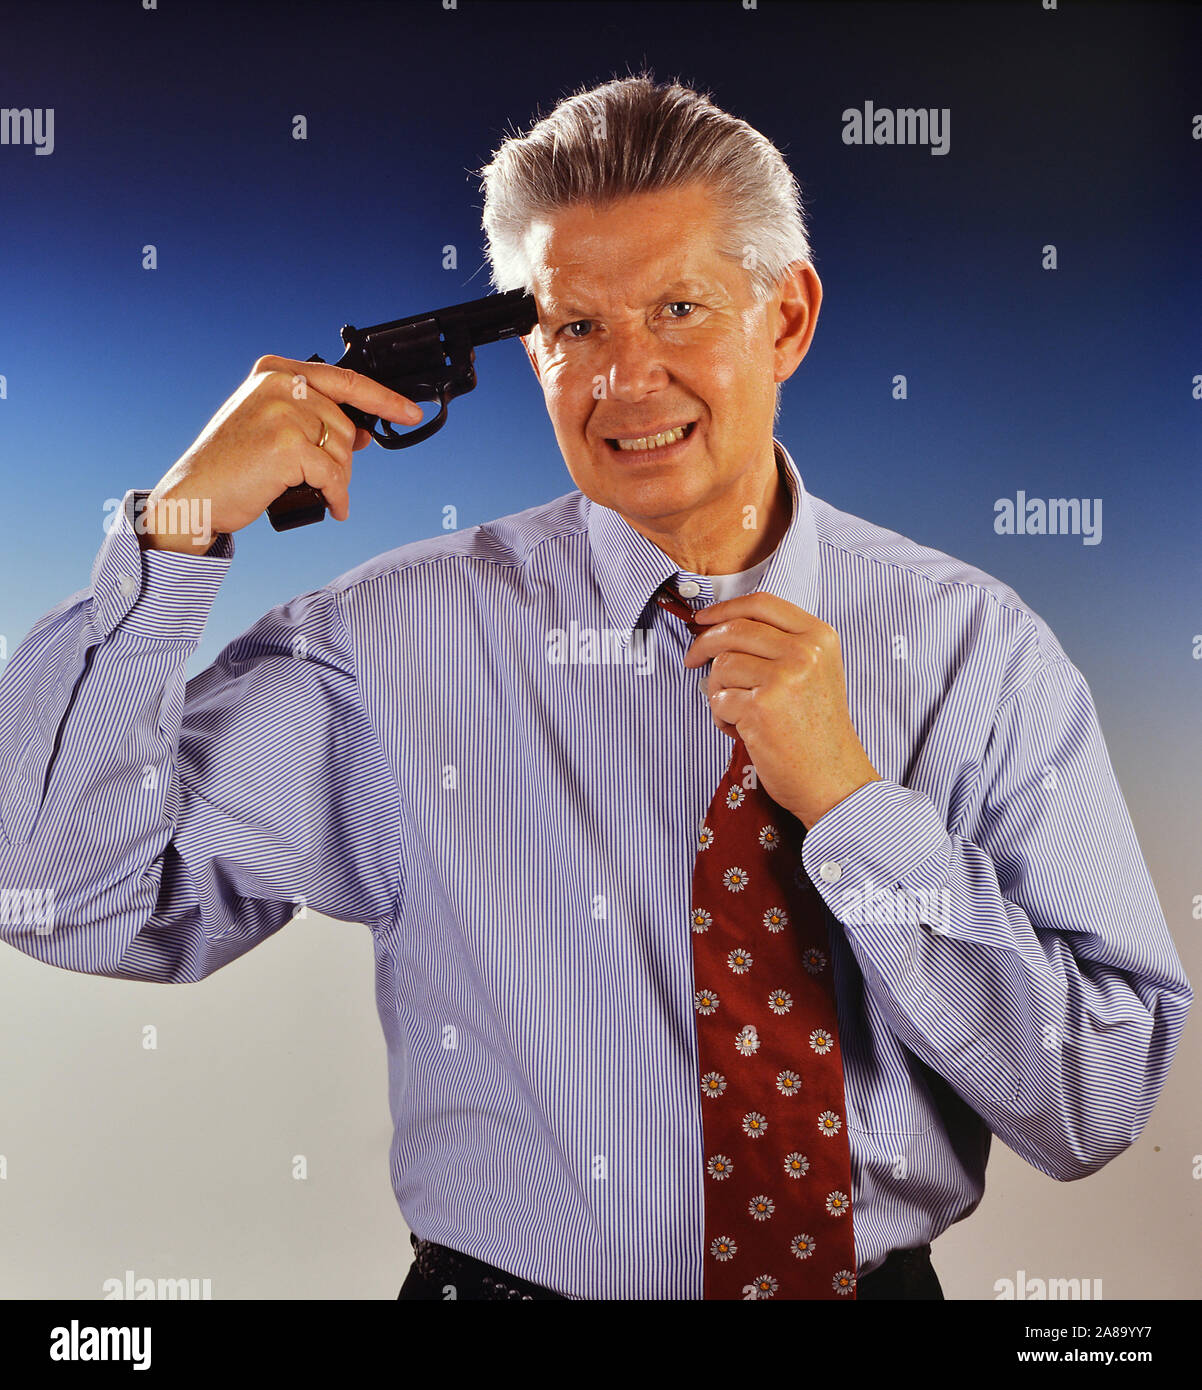 Mann mit Revolver in der Hand, Selbstmord, Selbstmörder, MR: Yes Stock Photo